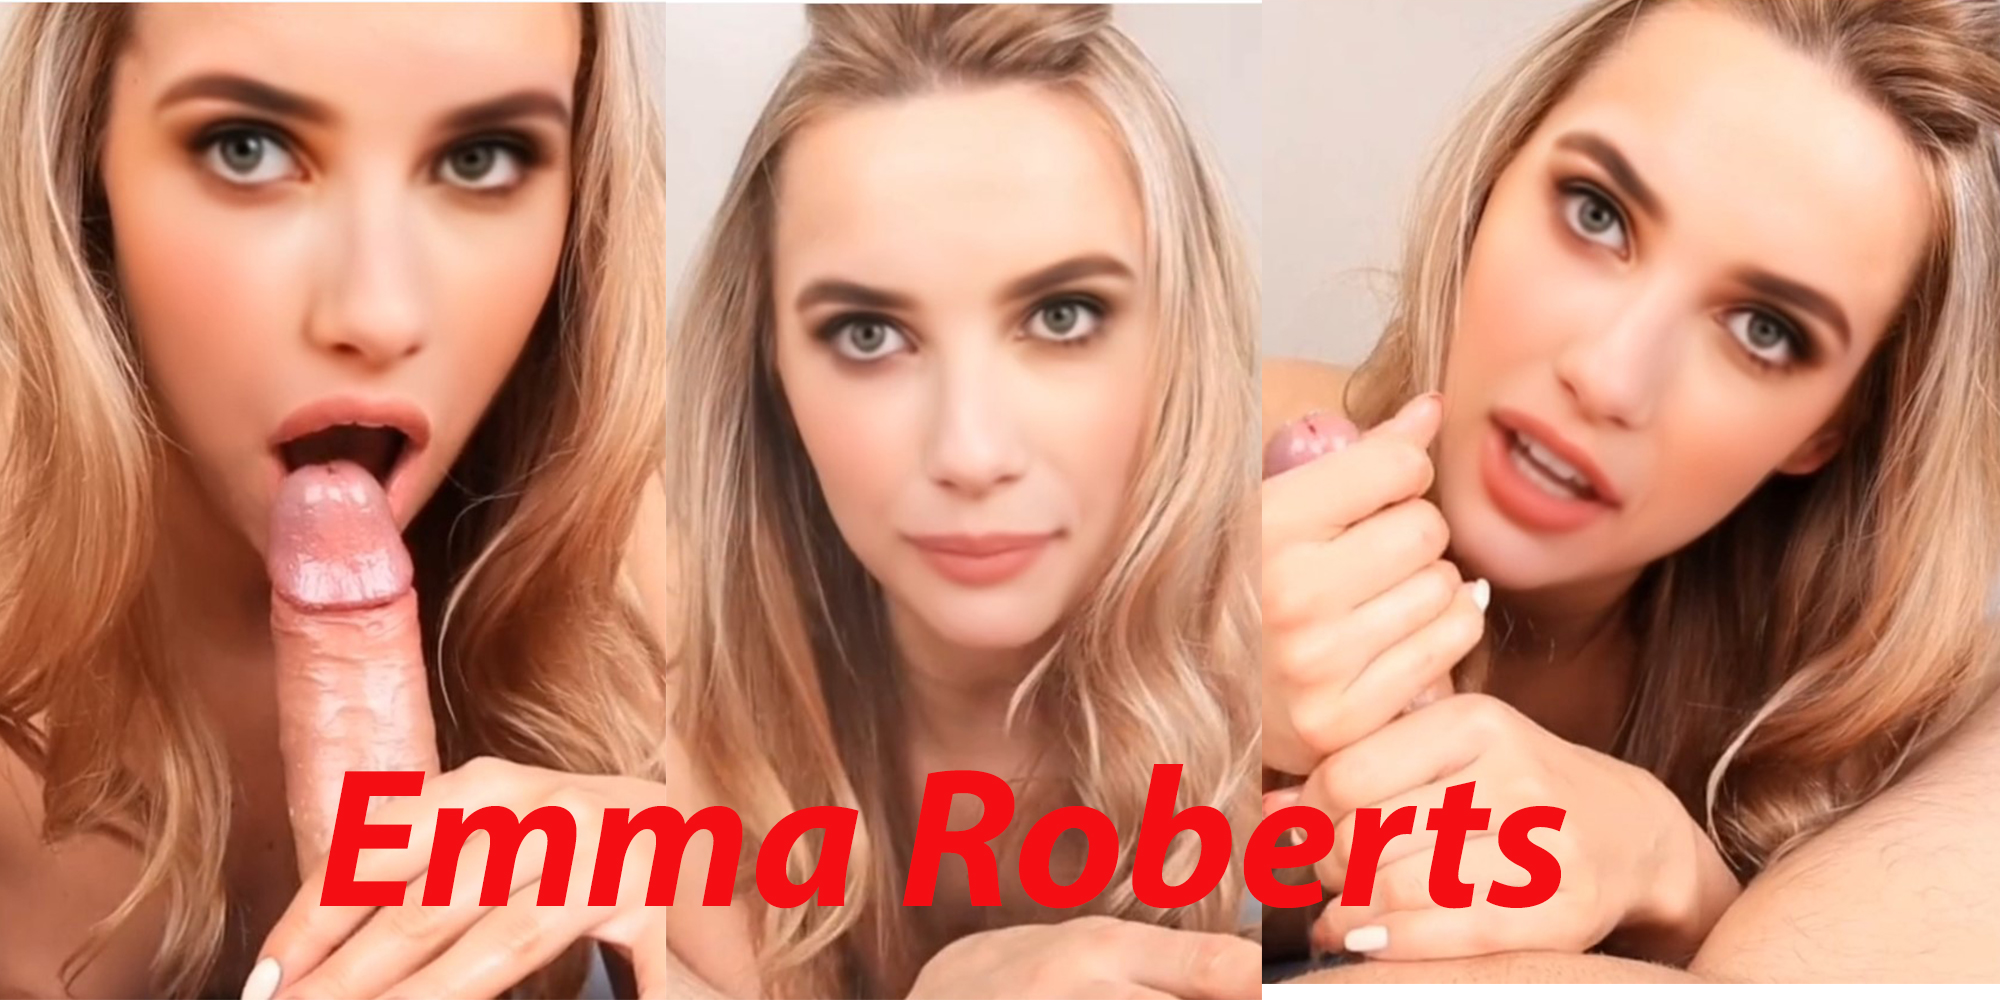 Emma Roberts amazing teasing and blowjob